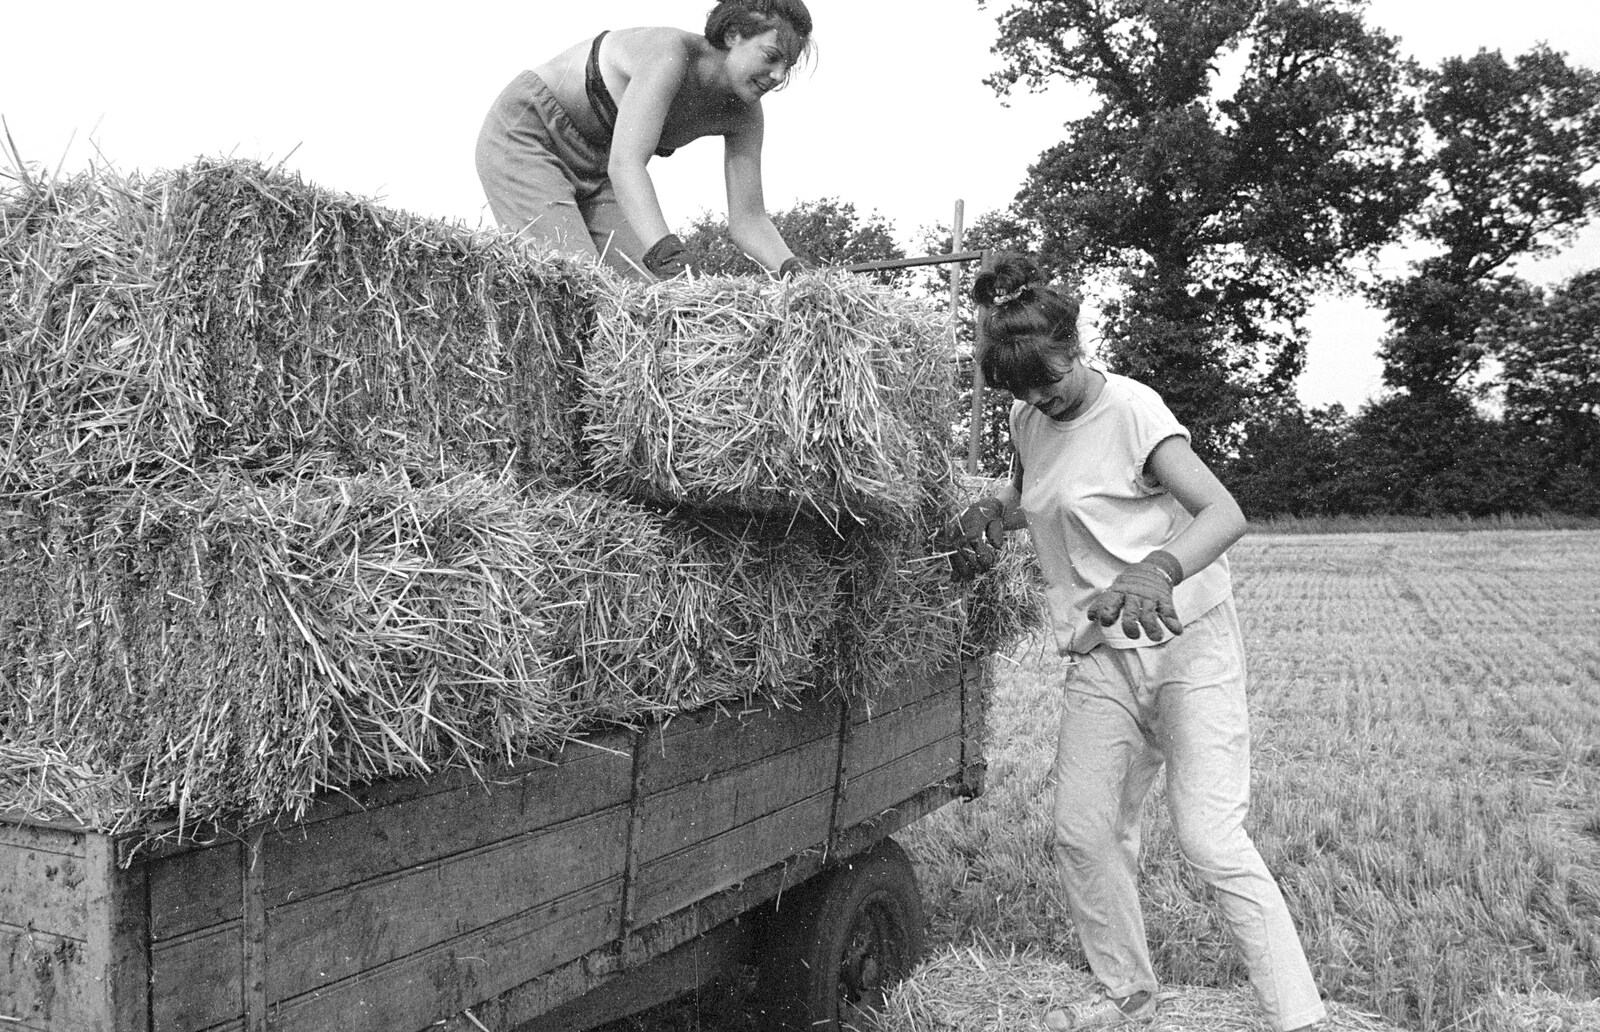 Sarah and Rachel from Working on the Harvest, Tibenham, Norfolk - 11th August 1992